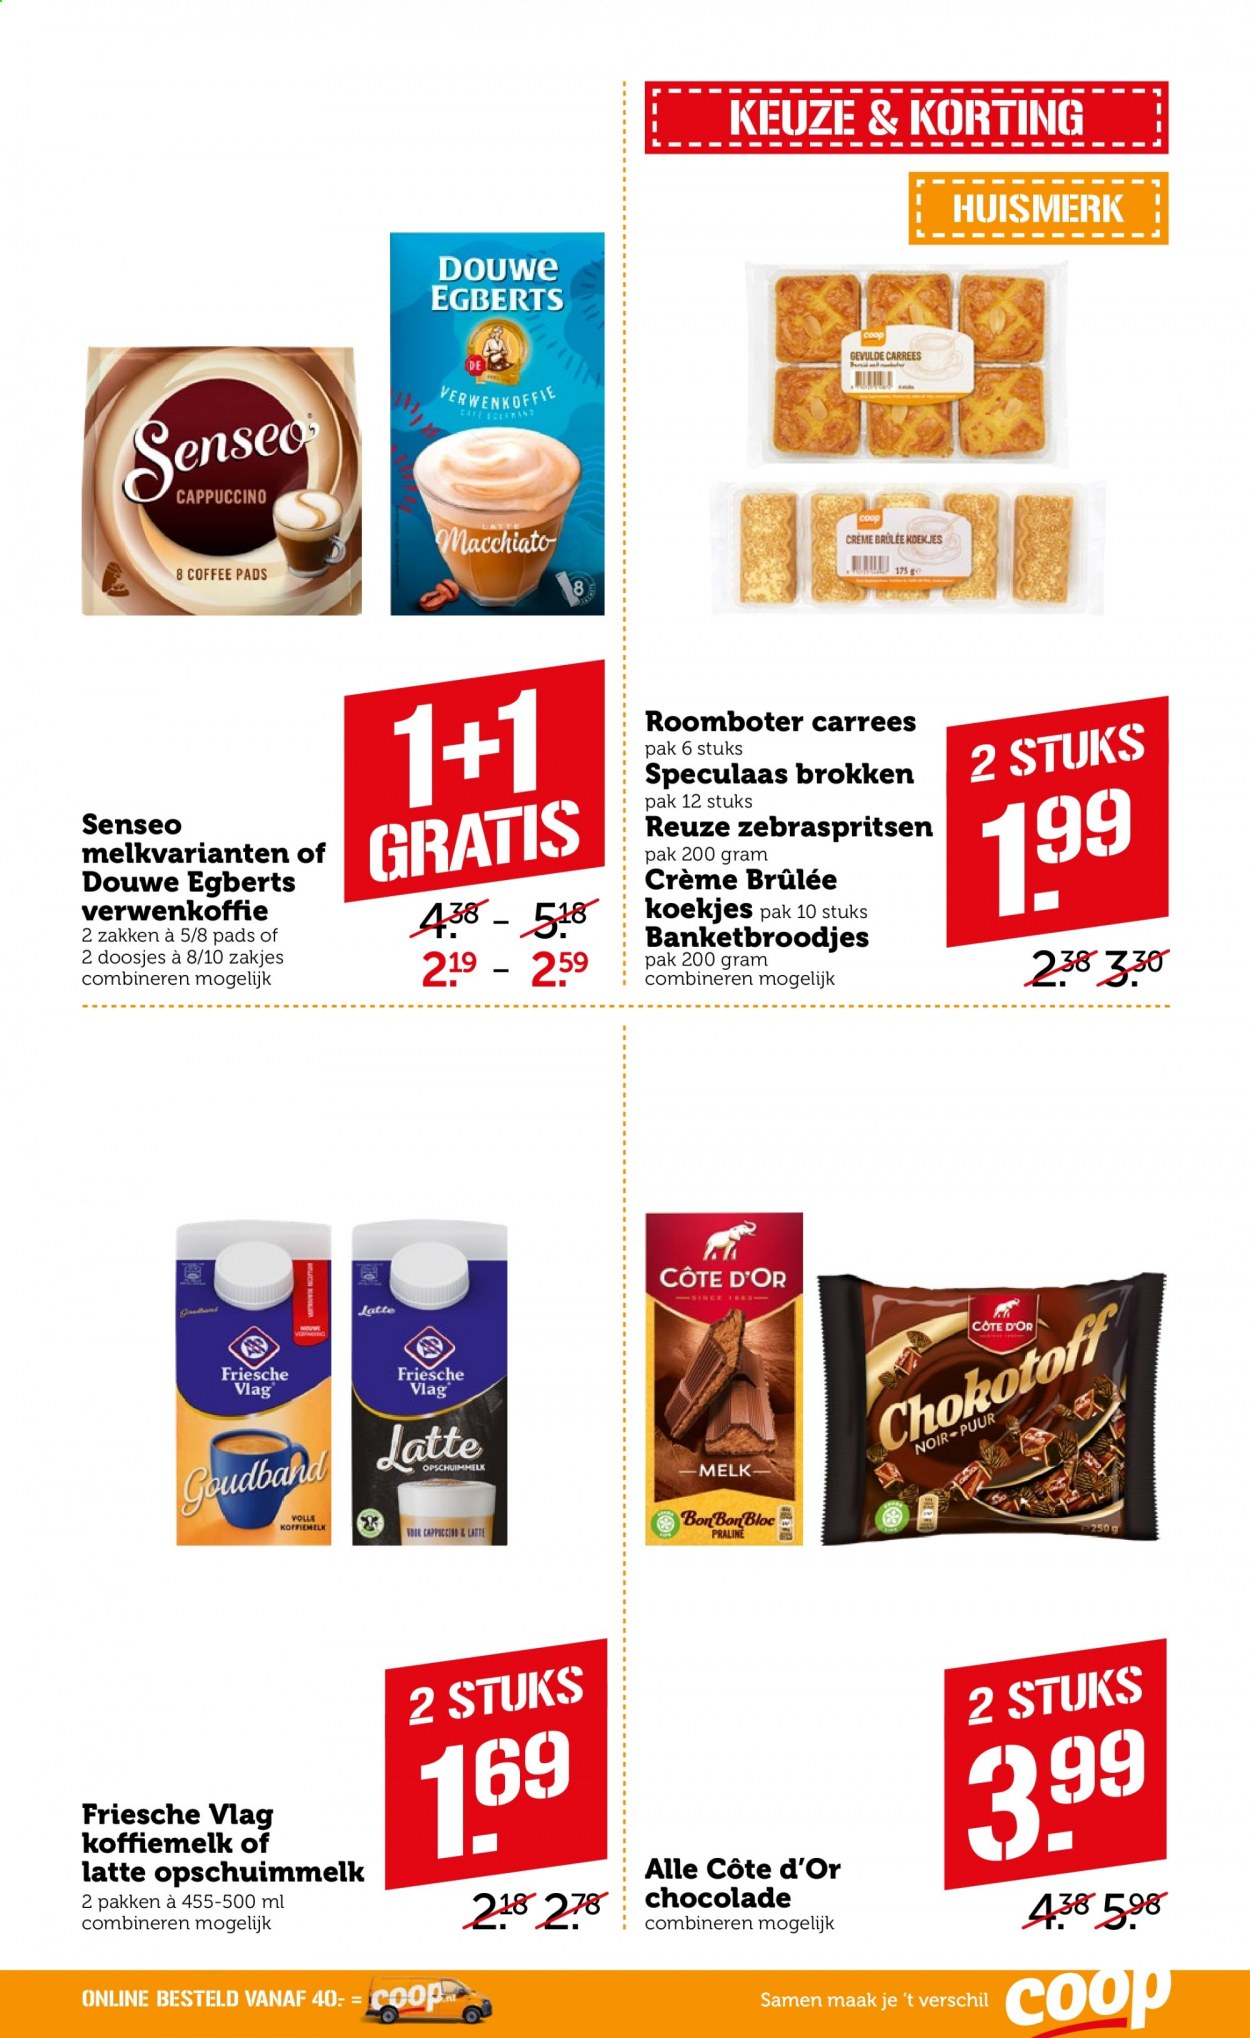 thumbnail - Coop-aanbieding - 22-2-2021 - 28-2-2021 -  producten in de aanbieding - crème brûlée, crème, melk, roomboter, koffiemelk, chocolade, koekjes, Douwe Egberts, Senseo. Pagina 18.